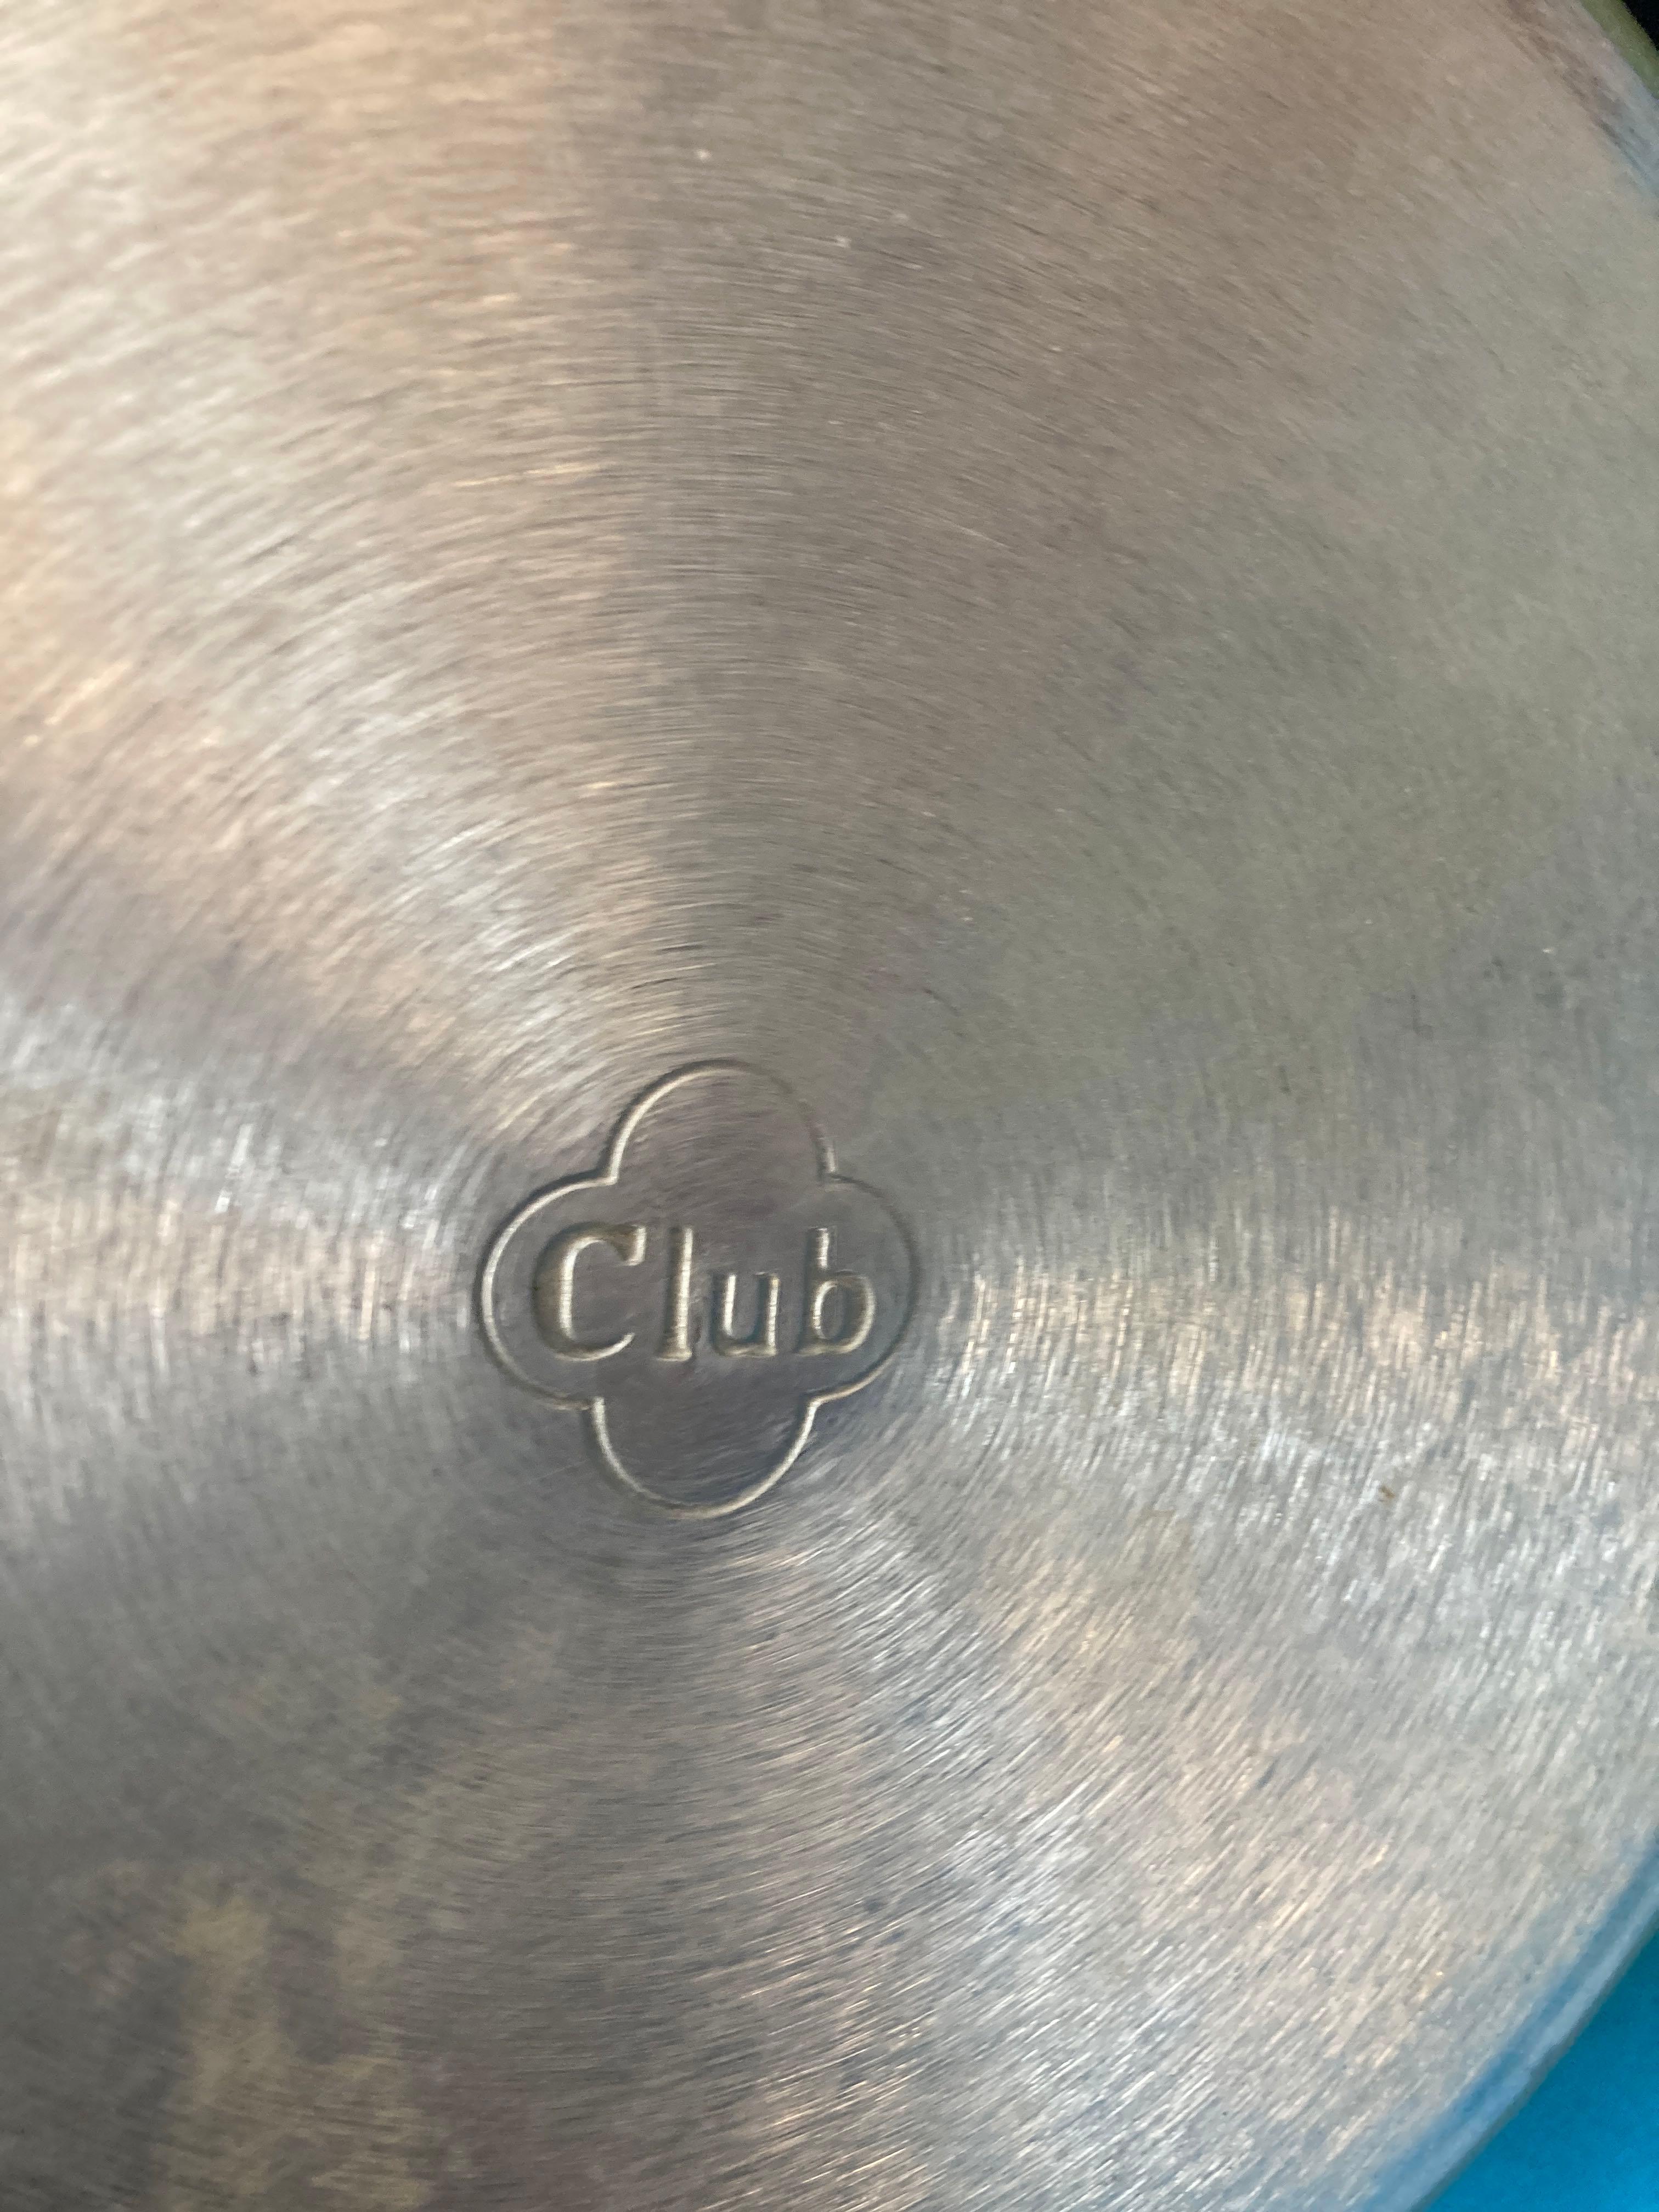 New Nordic ware Bundt pan and Club aluminum pot with lid lid